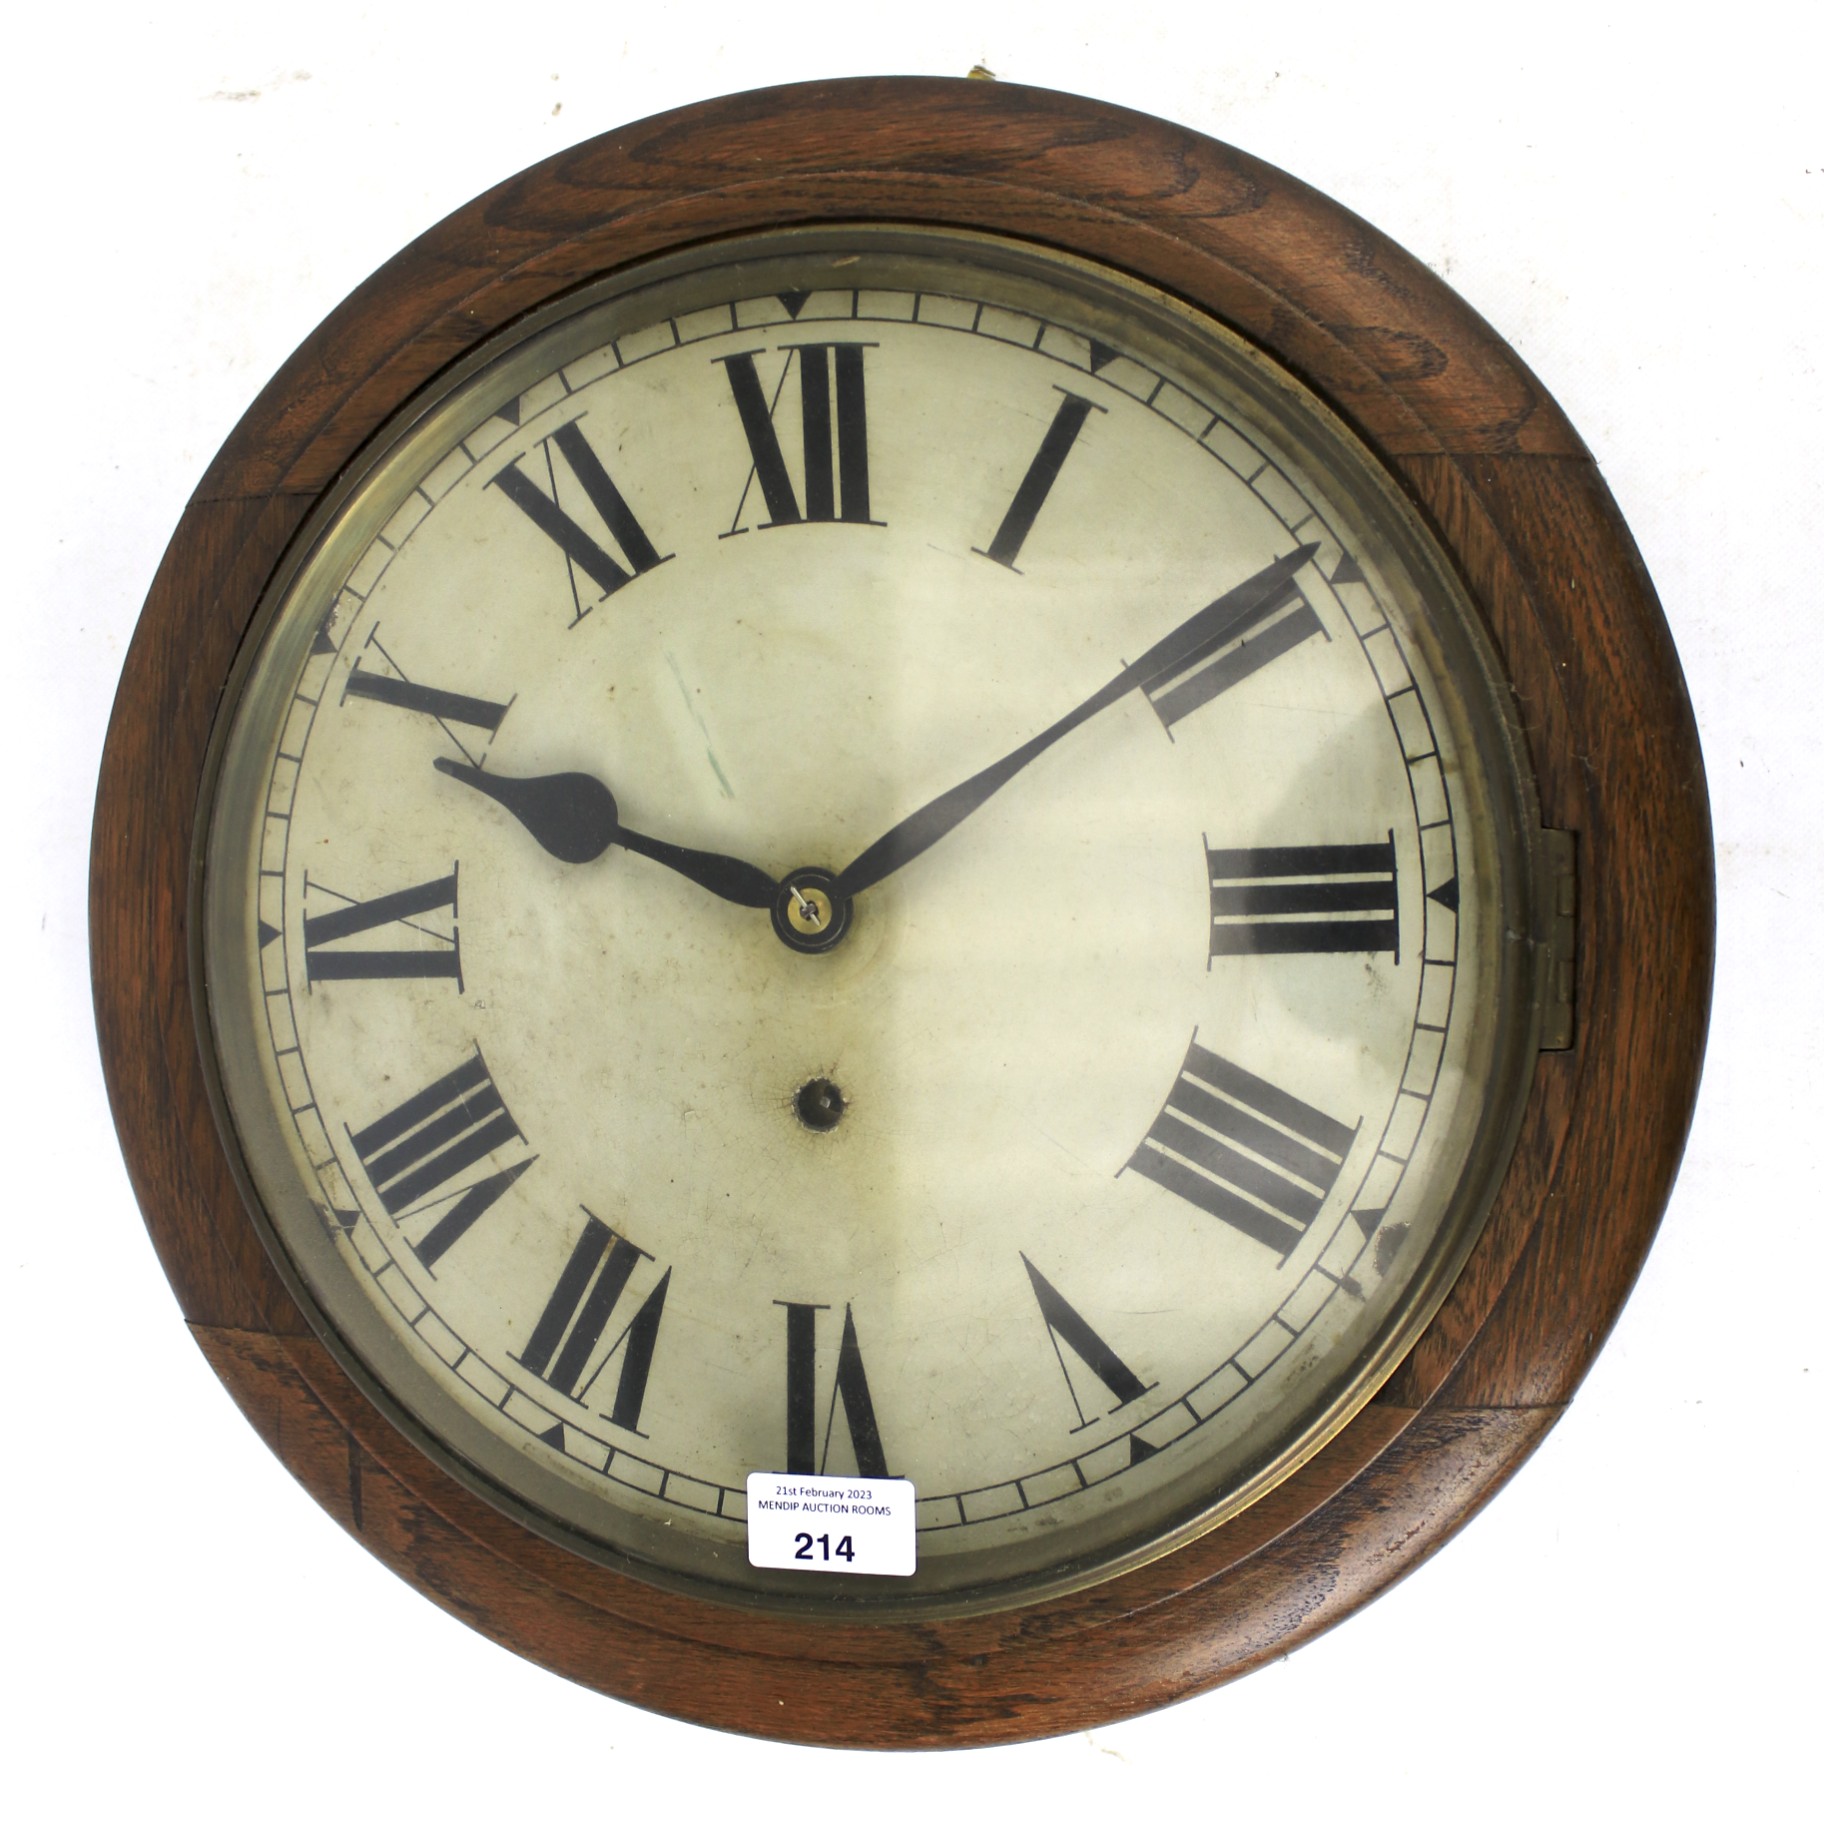 A 19th century circular wall clock.